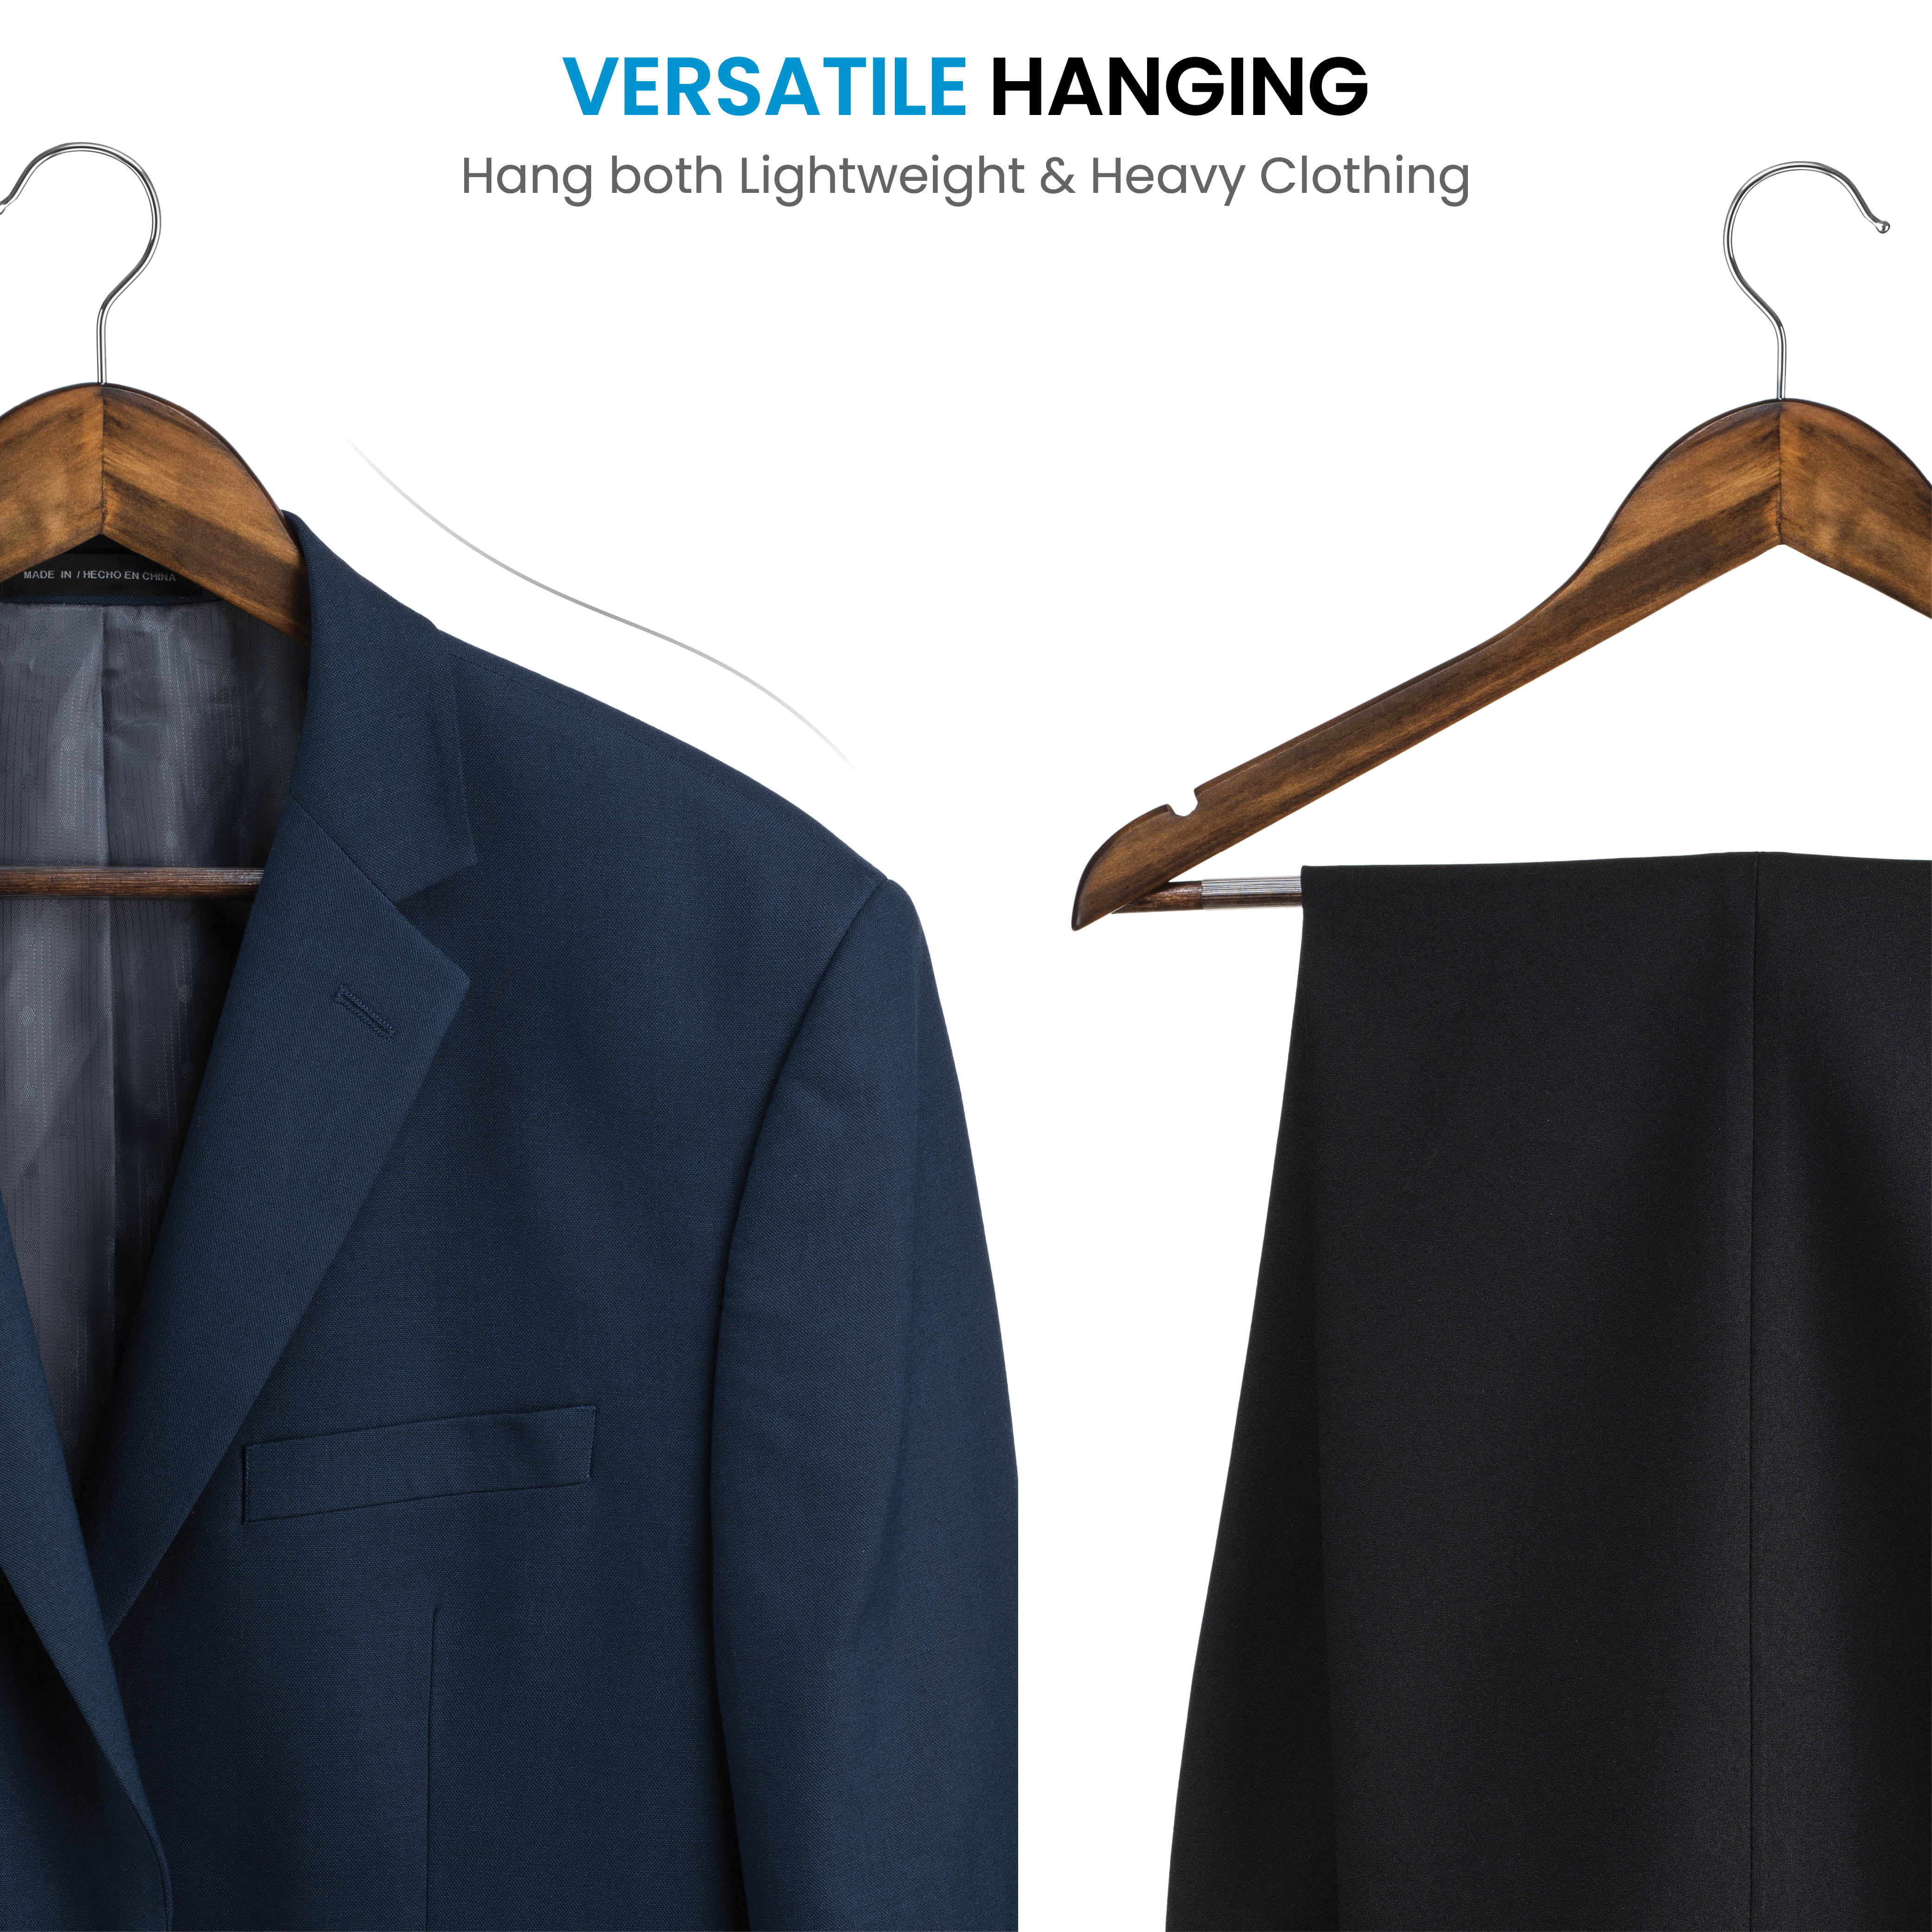 Wooden Hangers - Non-slip Wood Clothes Hanger For Suits, Pants